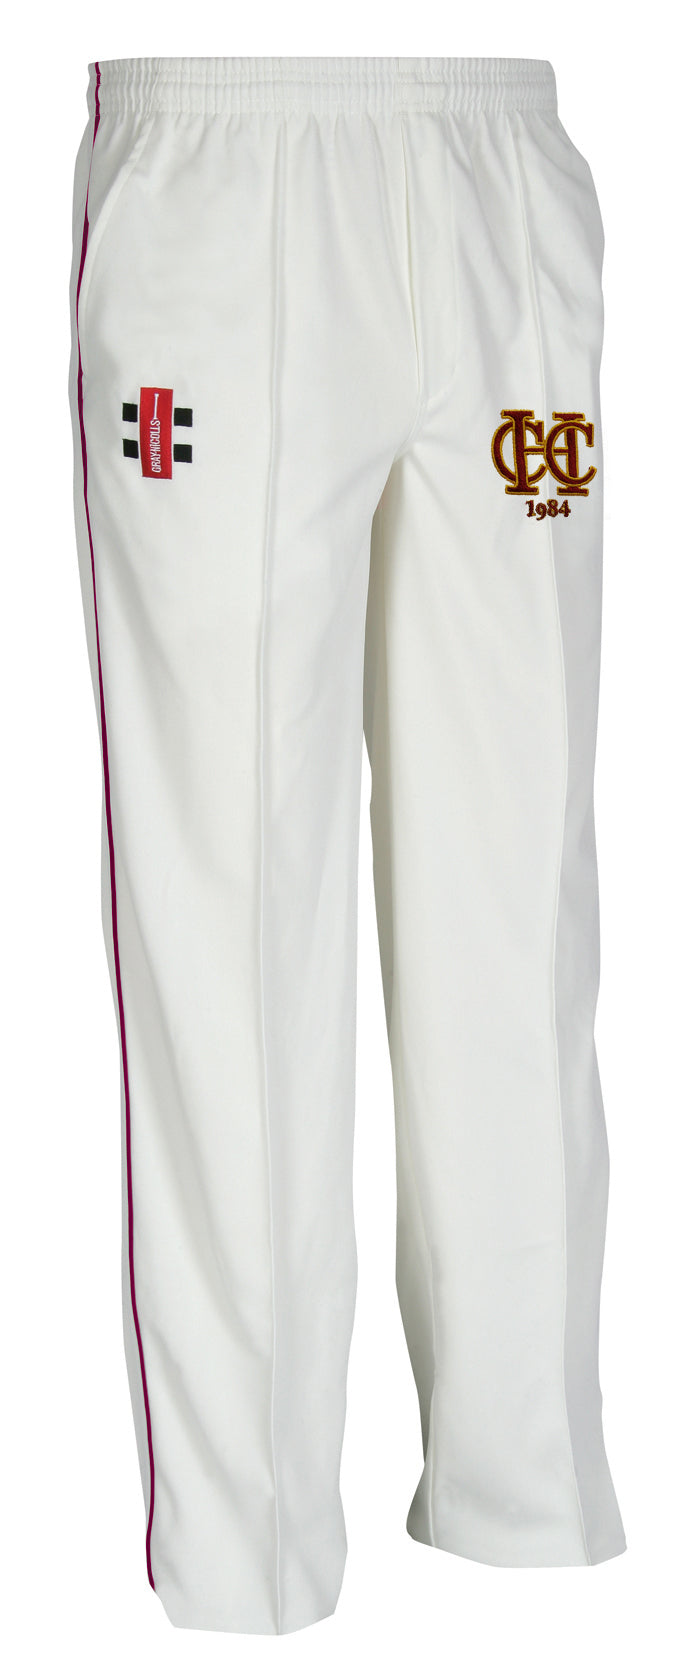 Hawkesbury Upton CC Matrix Junior Cricket Trouser